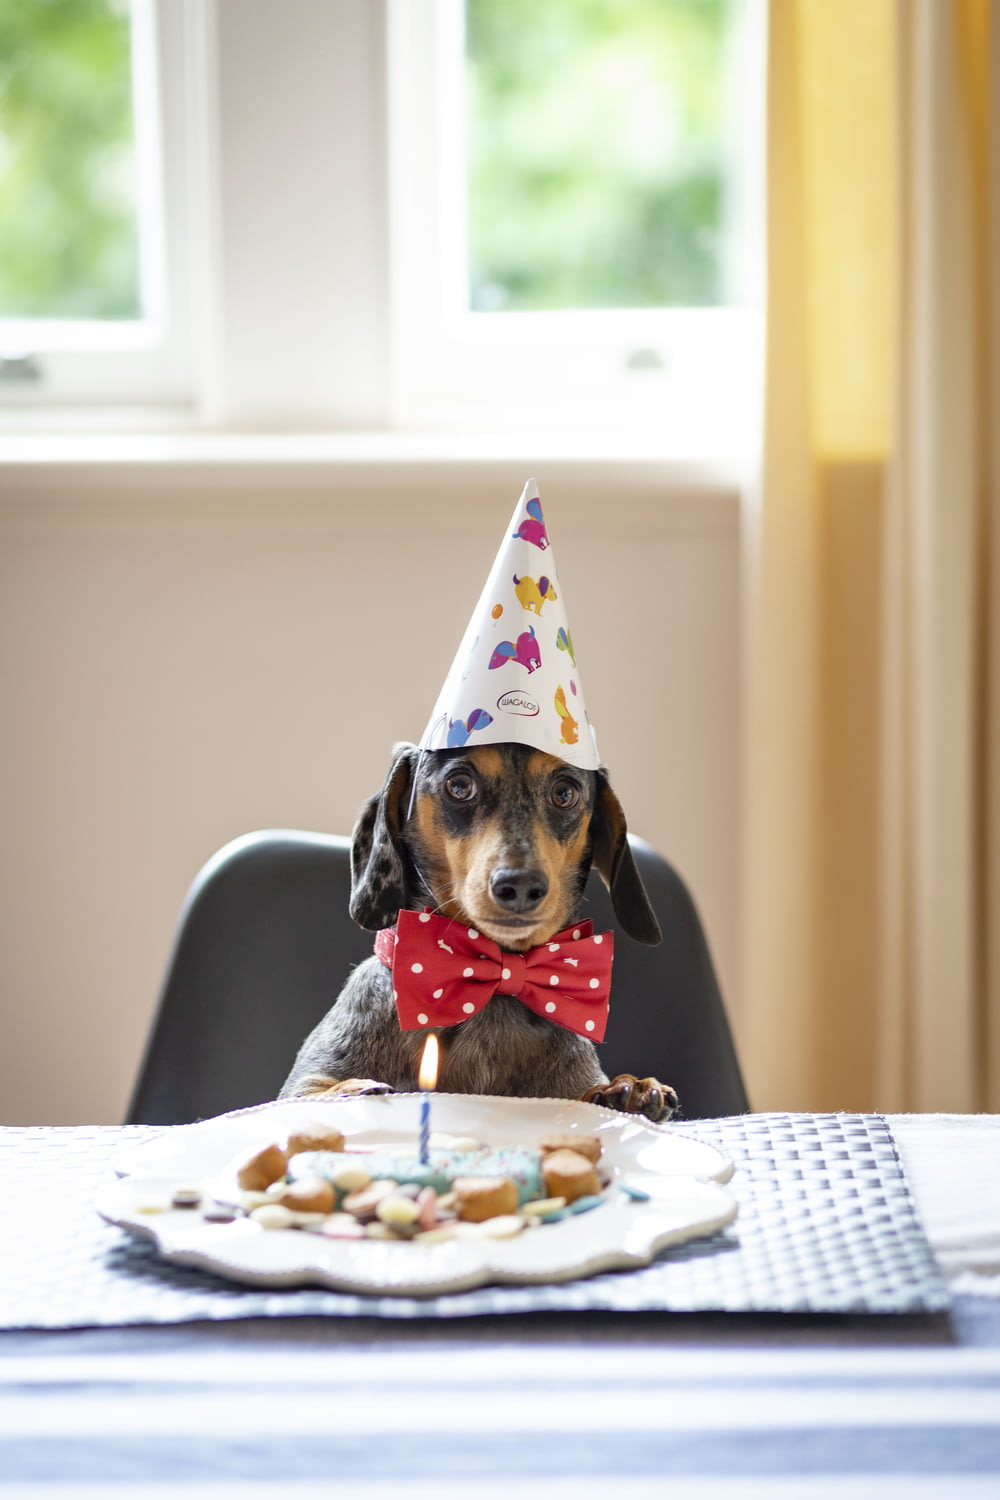 a dog wearing a birthday hat